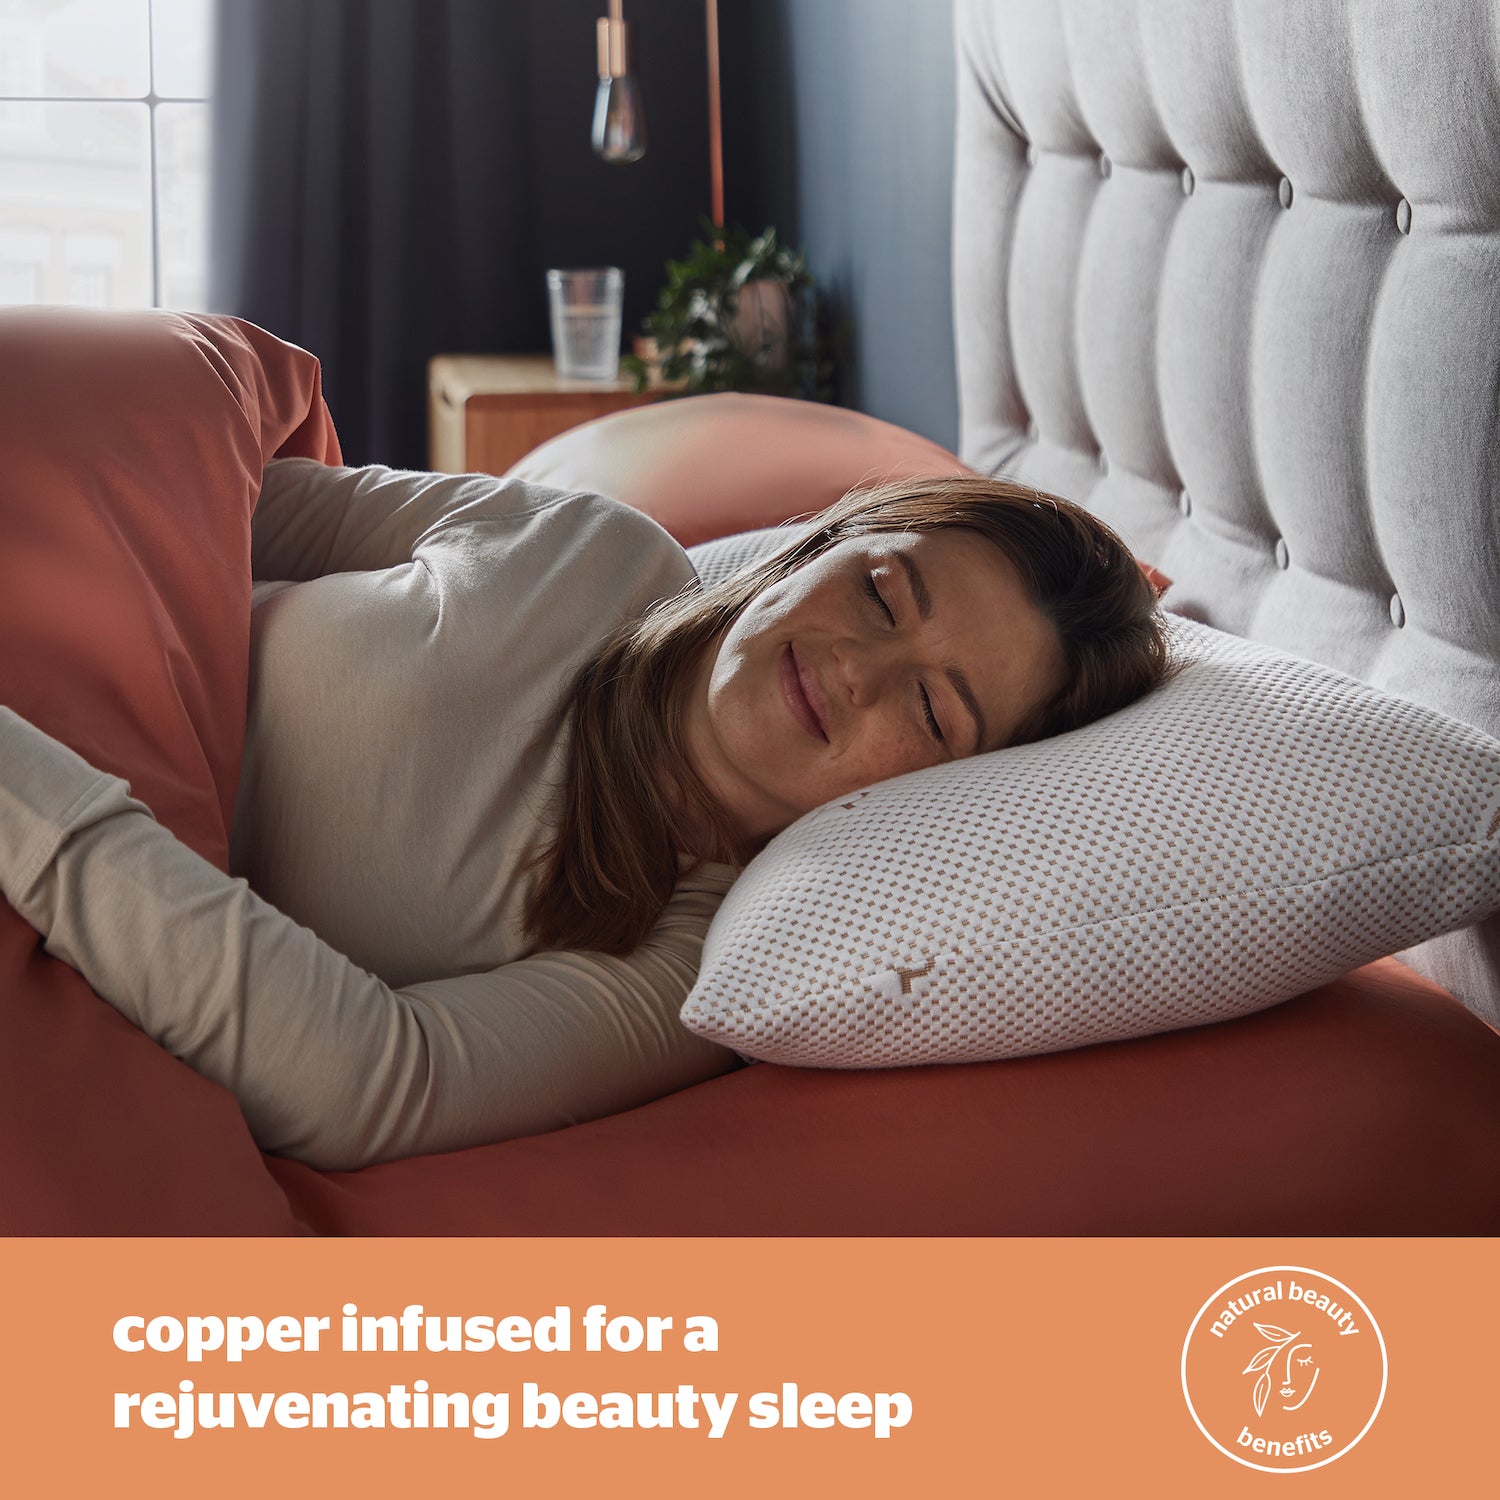 Silentnight Anti-Ageing Copper Pillow